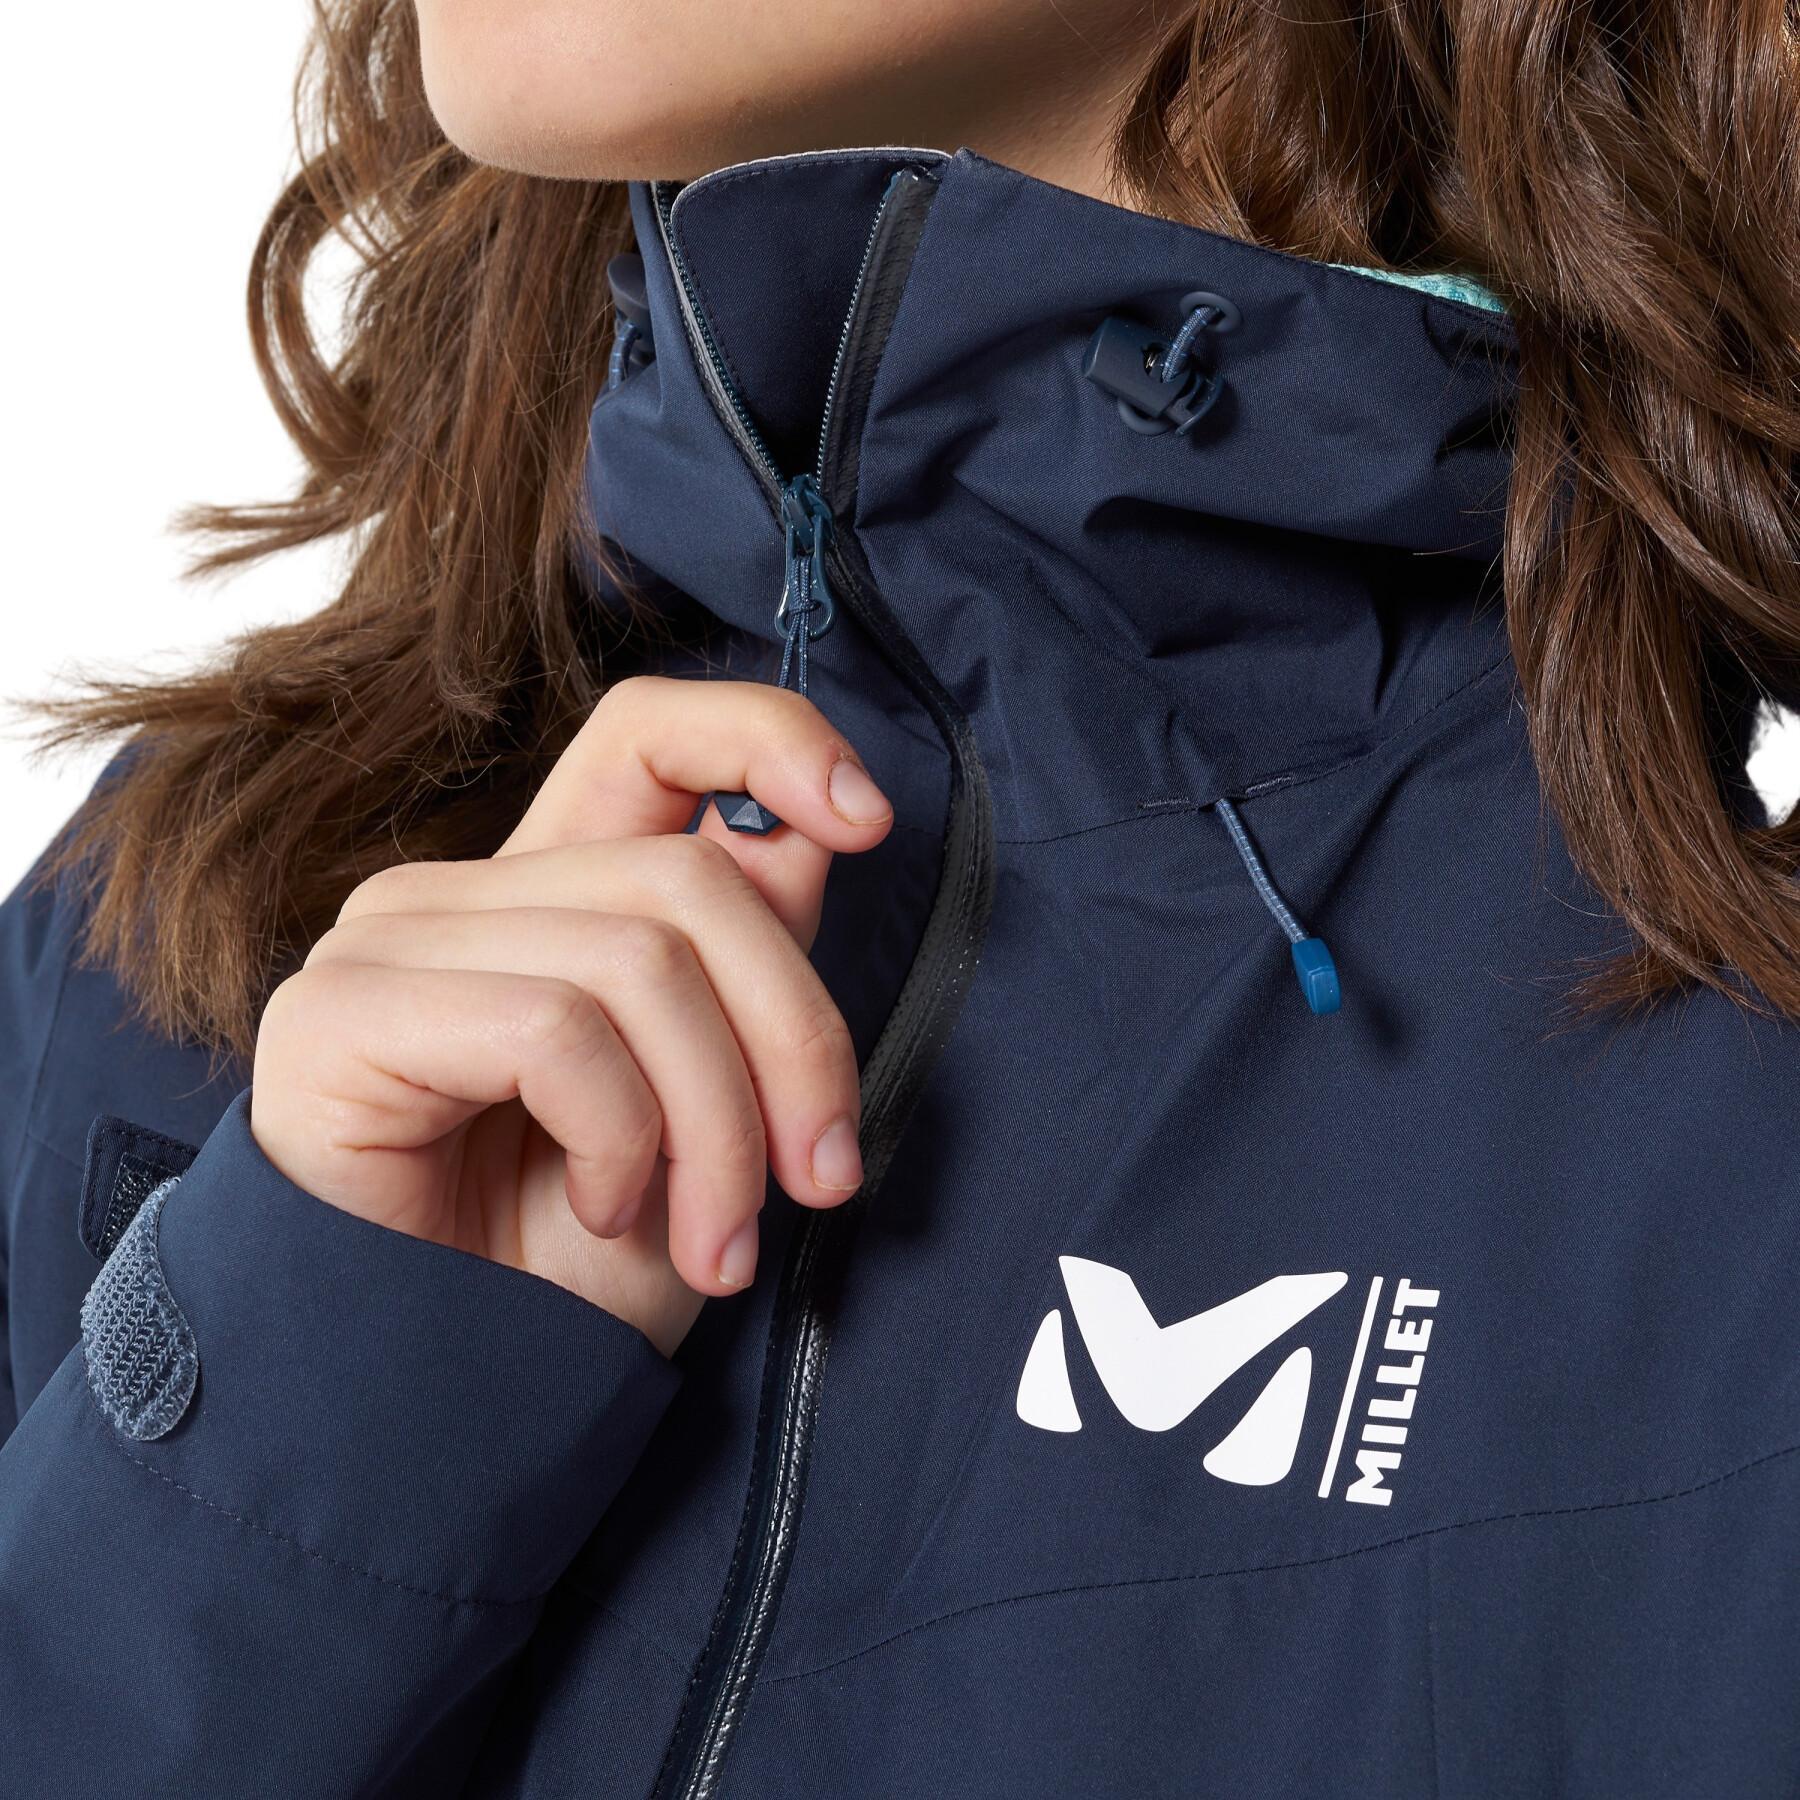 Women's hiking jacket Millet Mungo II GTX